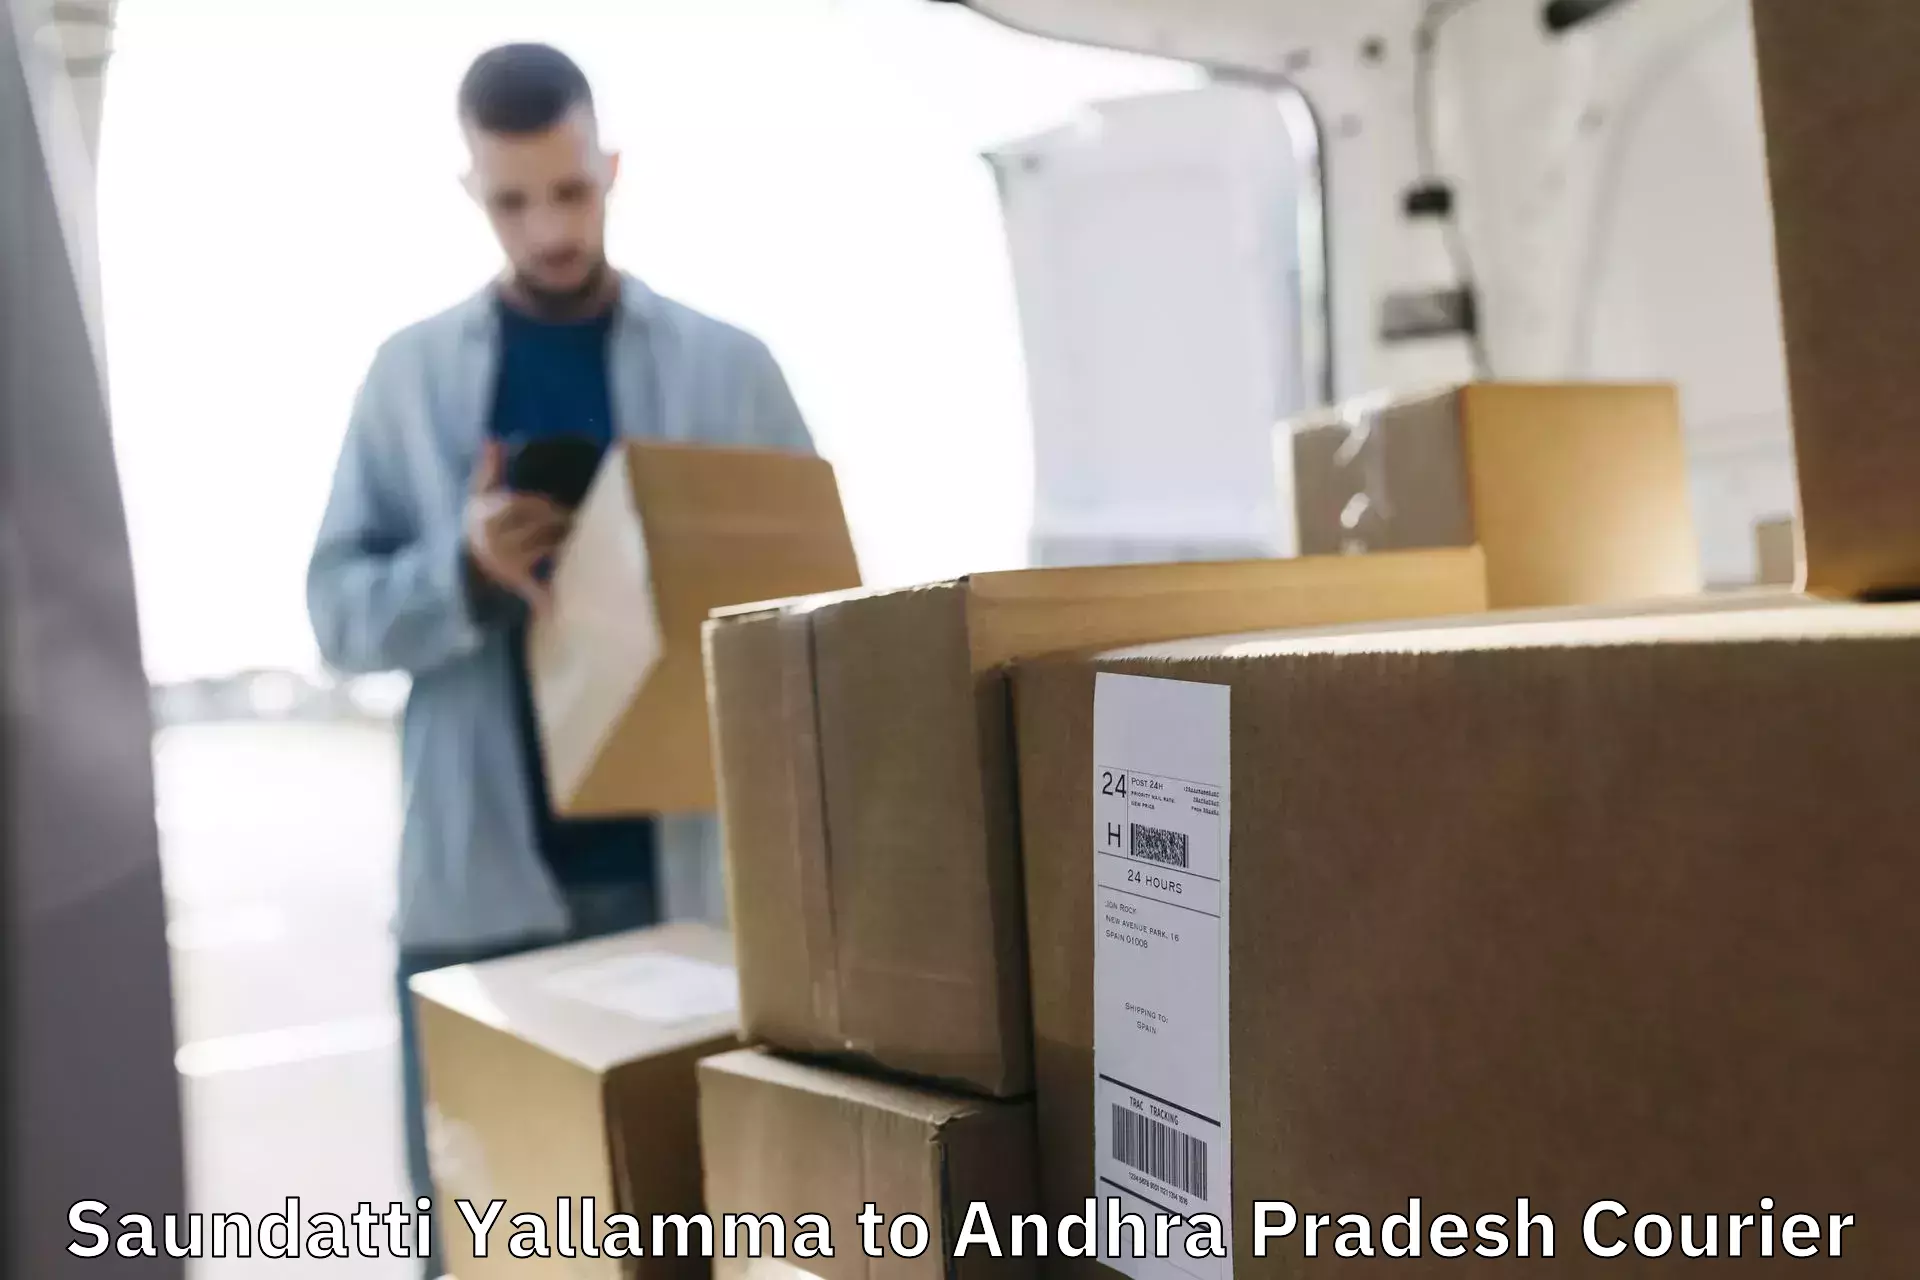 Express delivery network Saundatti Yallamma to Narpala